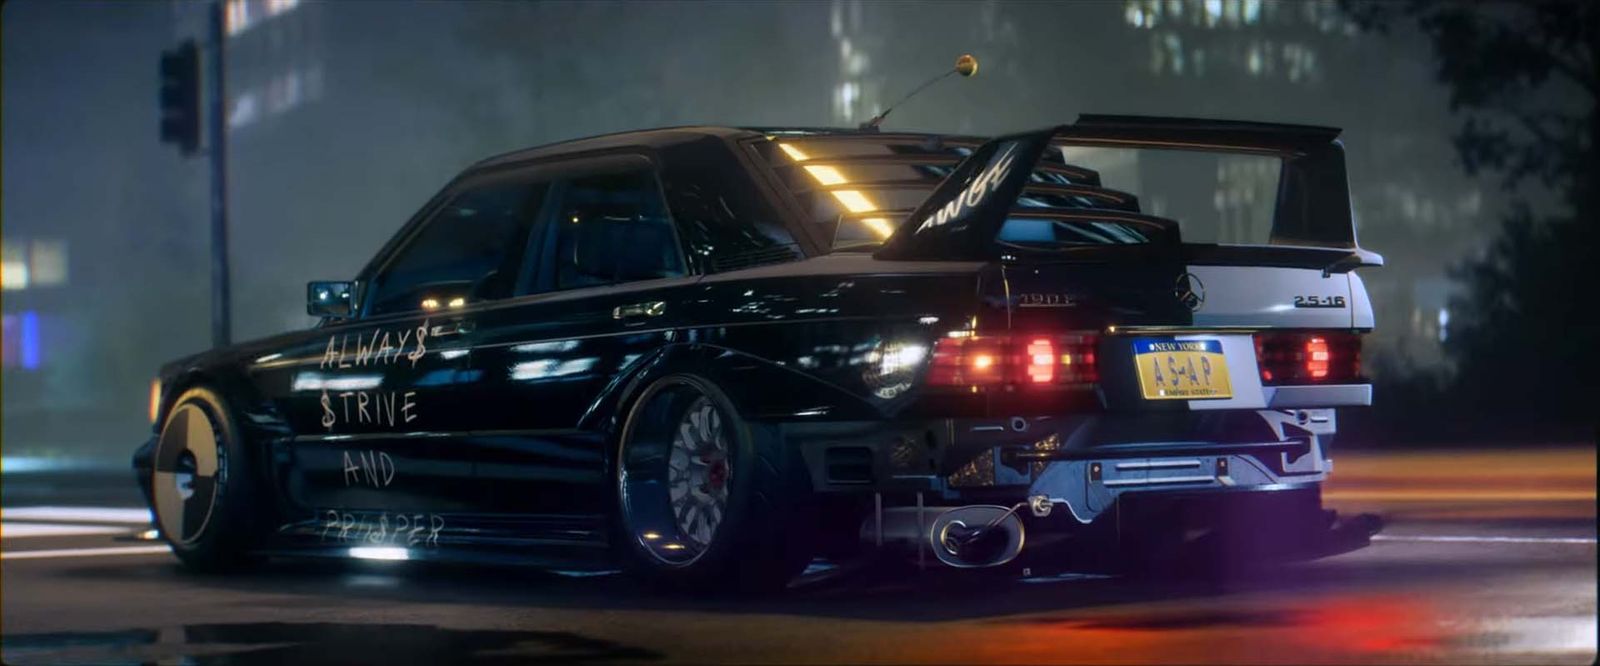 Need for Speed Unbound trailer screenshot